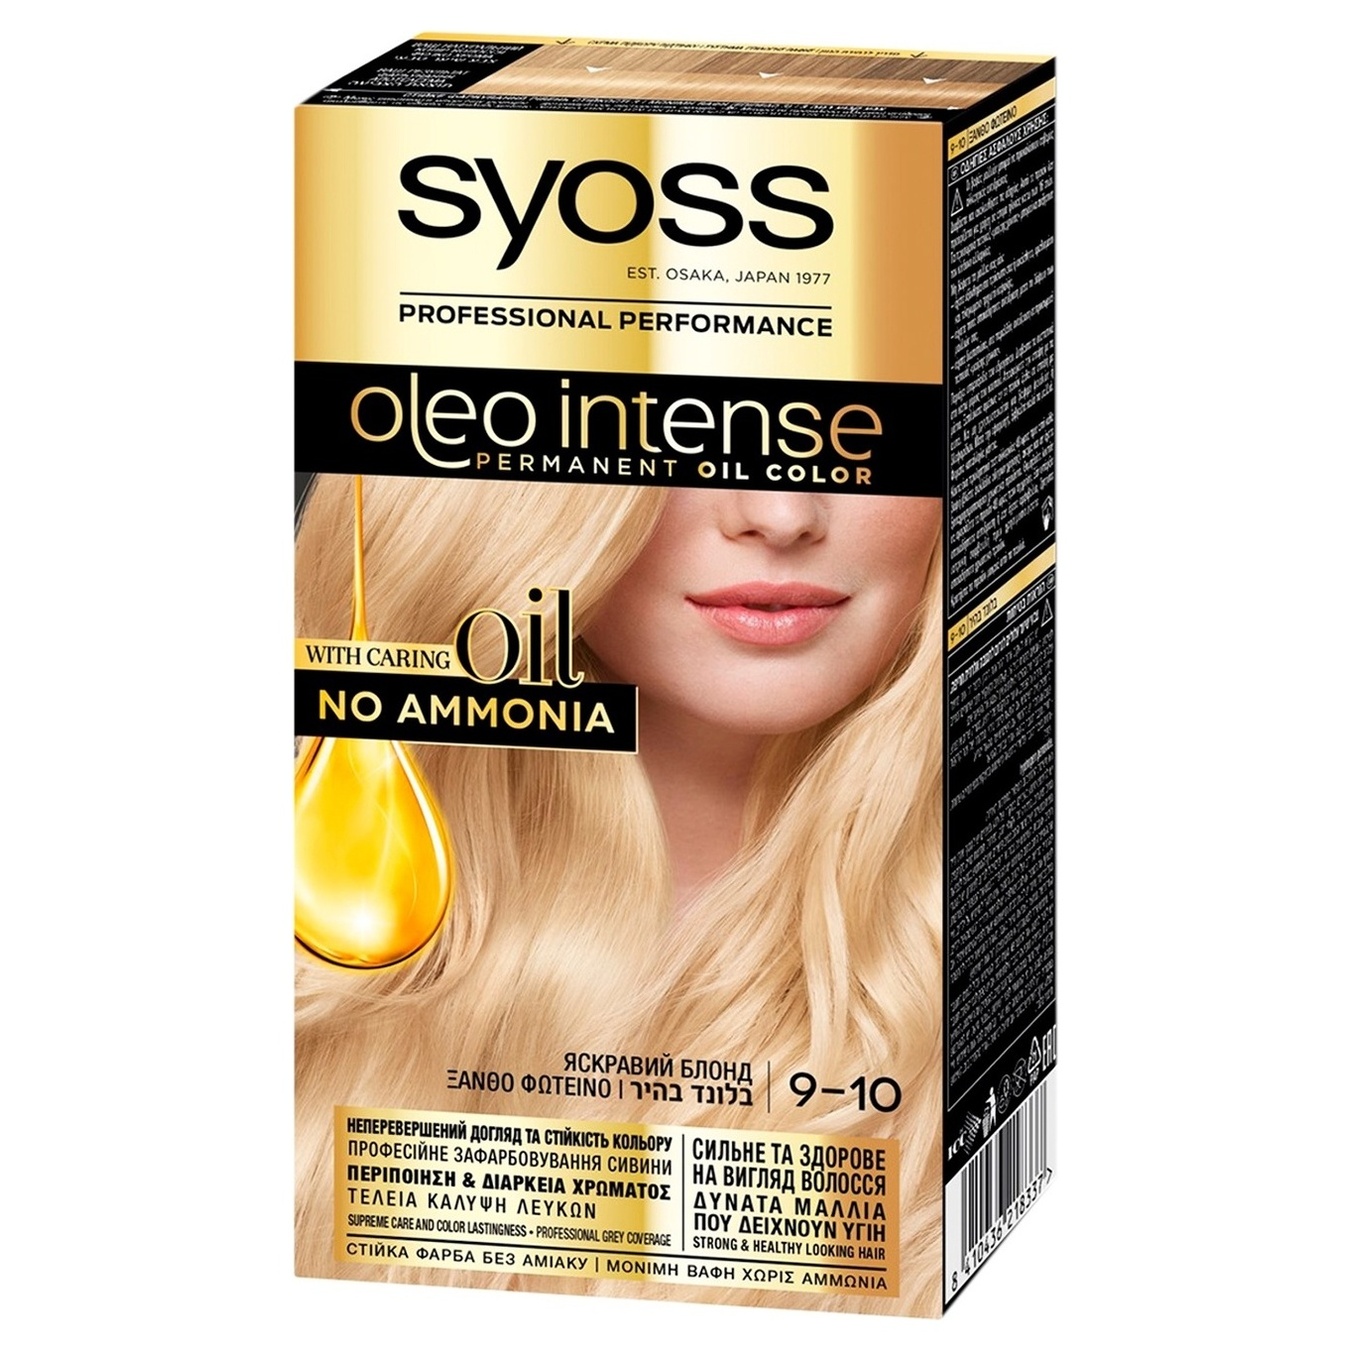 Syoss Oleo Intense Bright blonde hair dye without ammonia 9-10 115ml